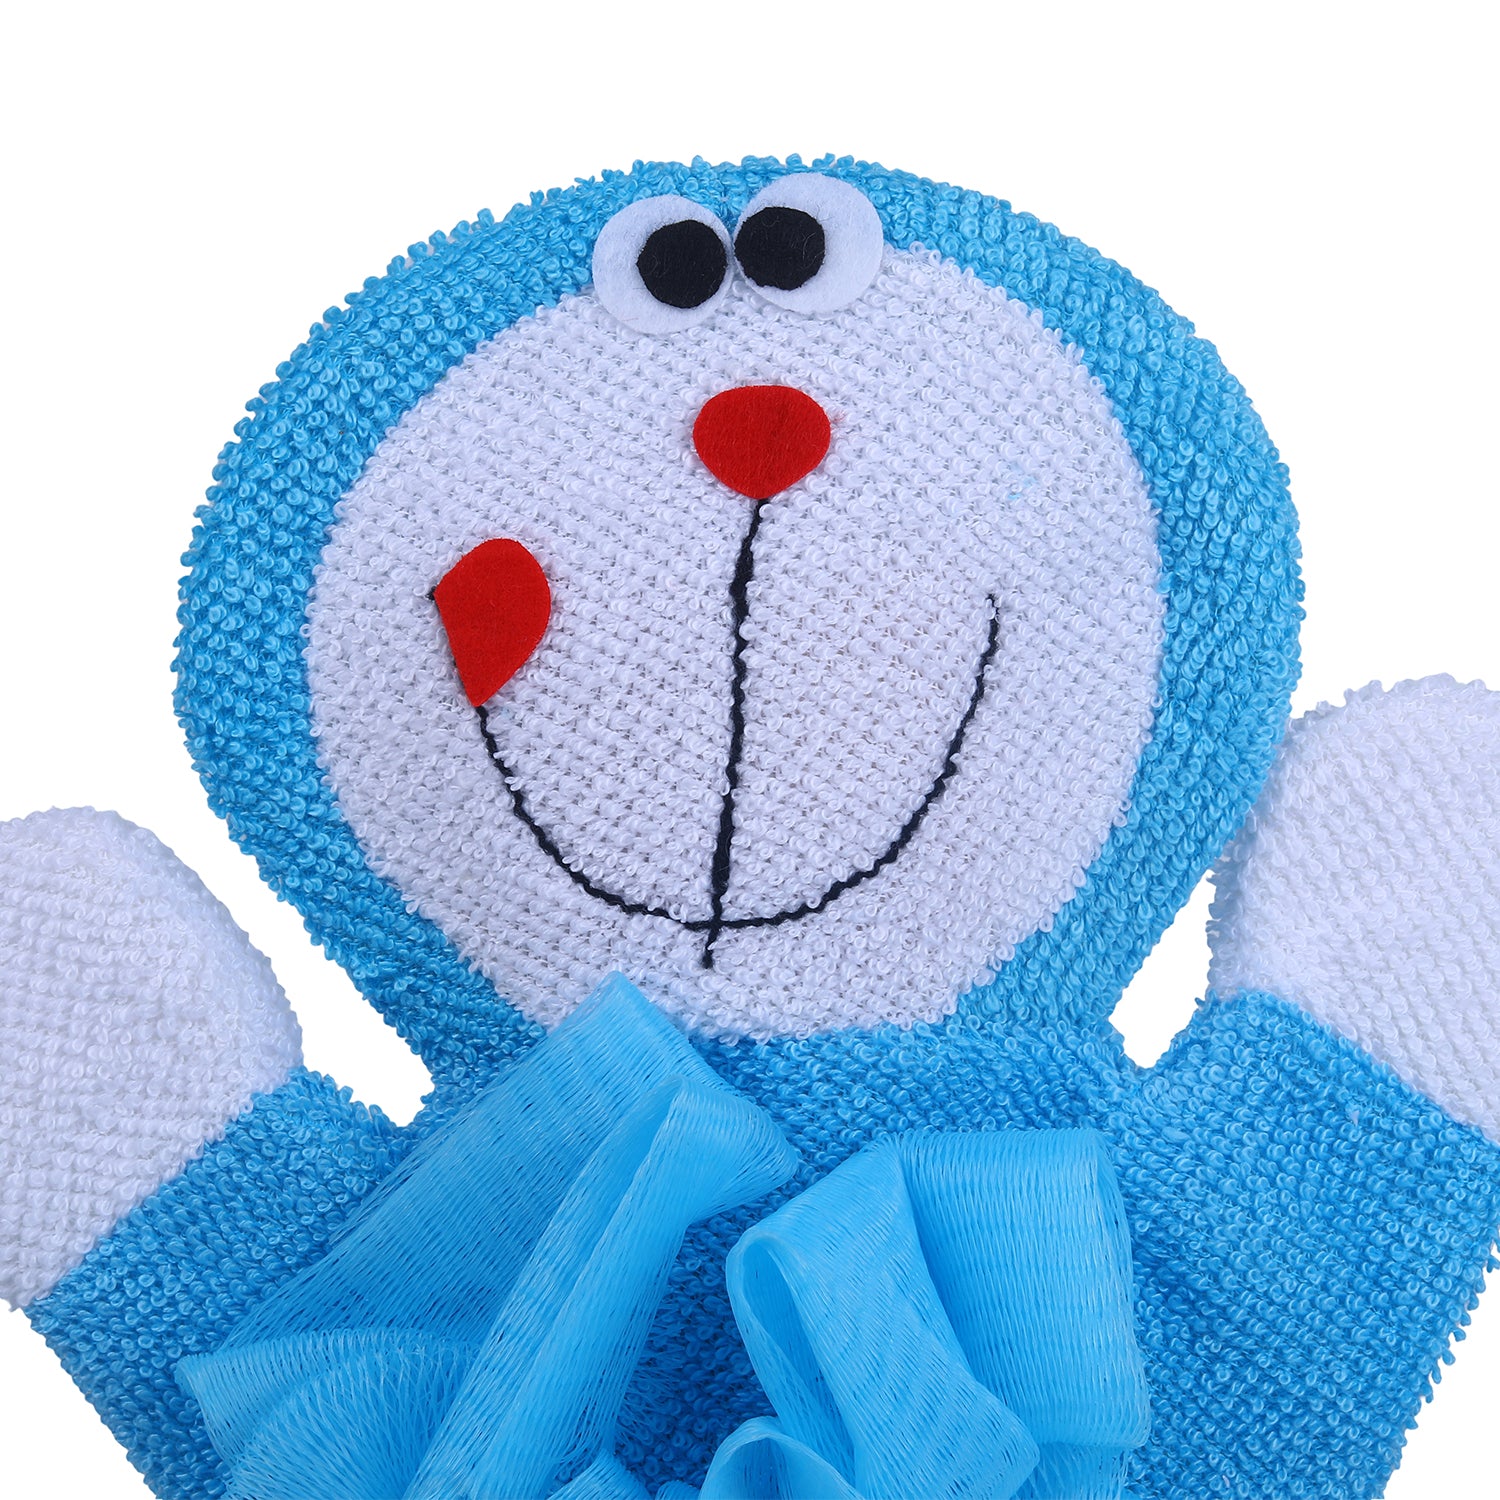 Baby Moo Robot Cat Bathtime Fun Hand Puppet Loofah Bath Glove - Blue